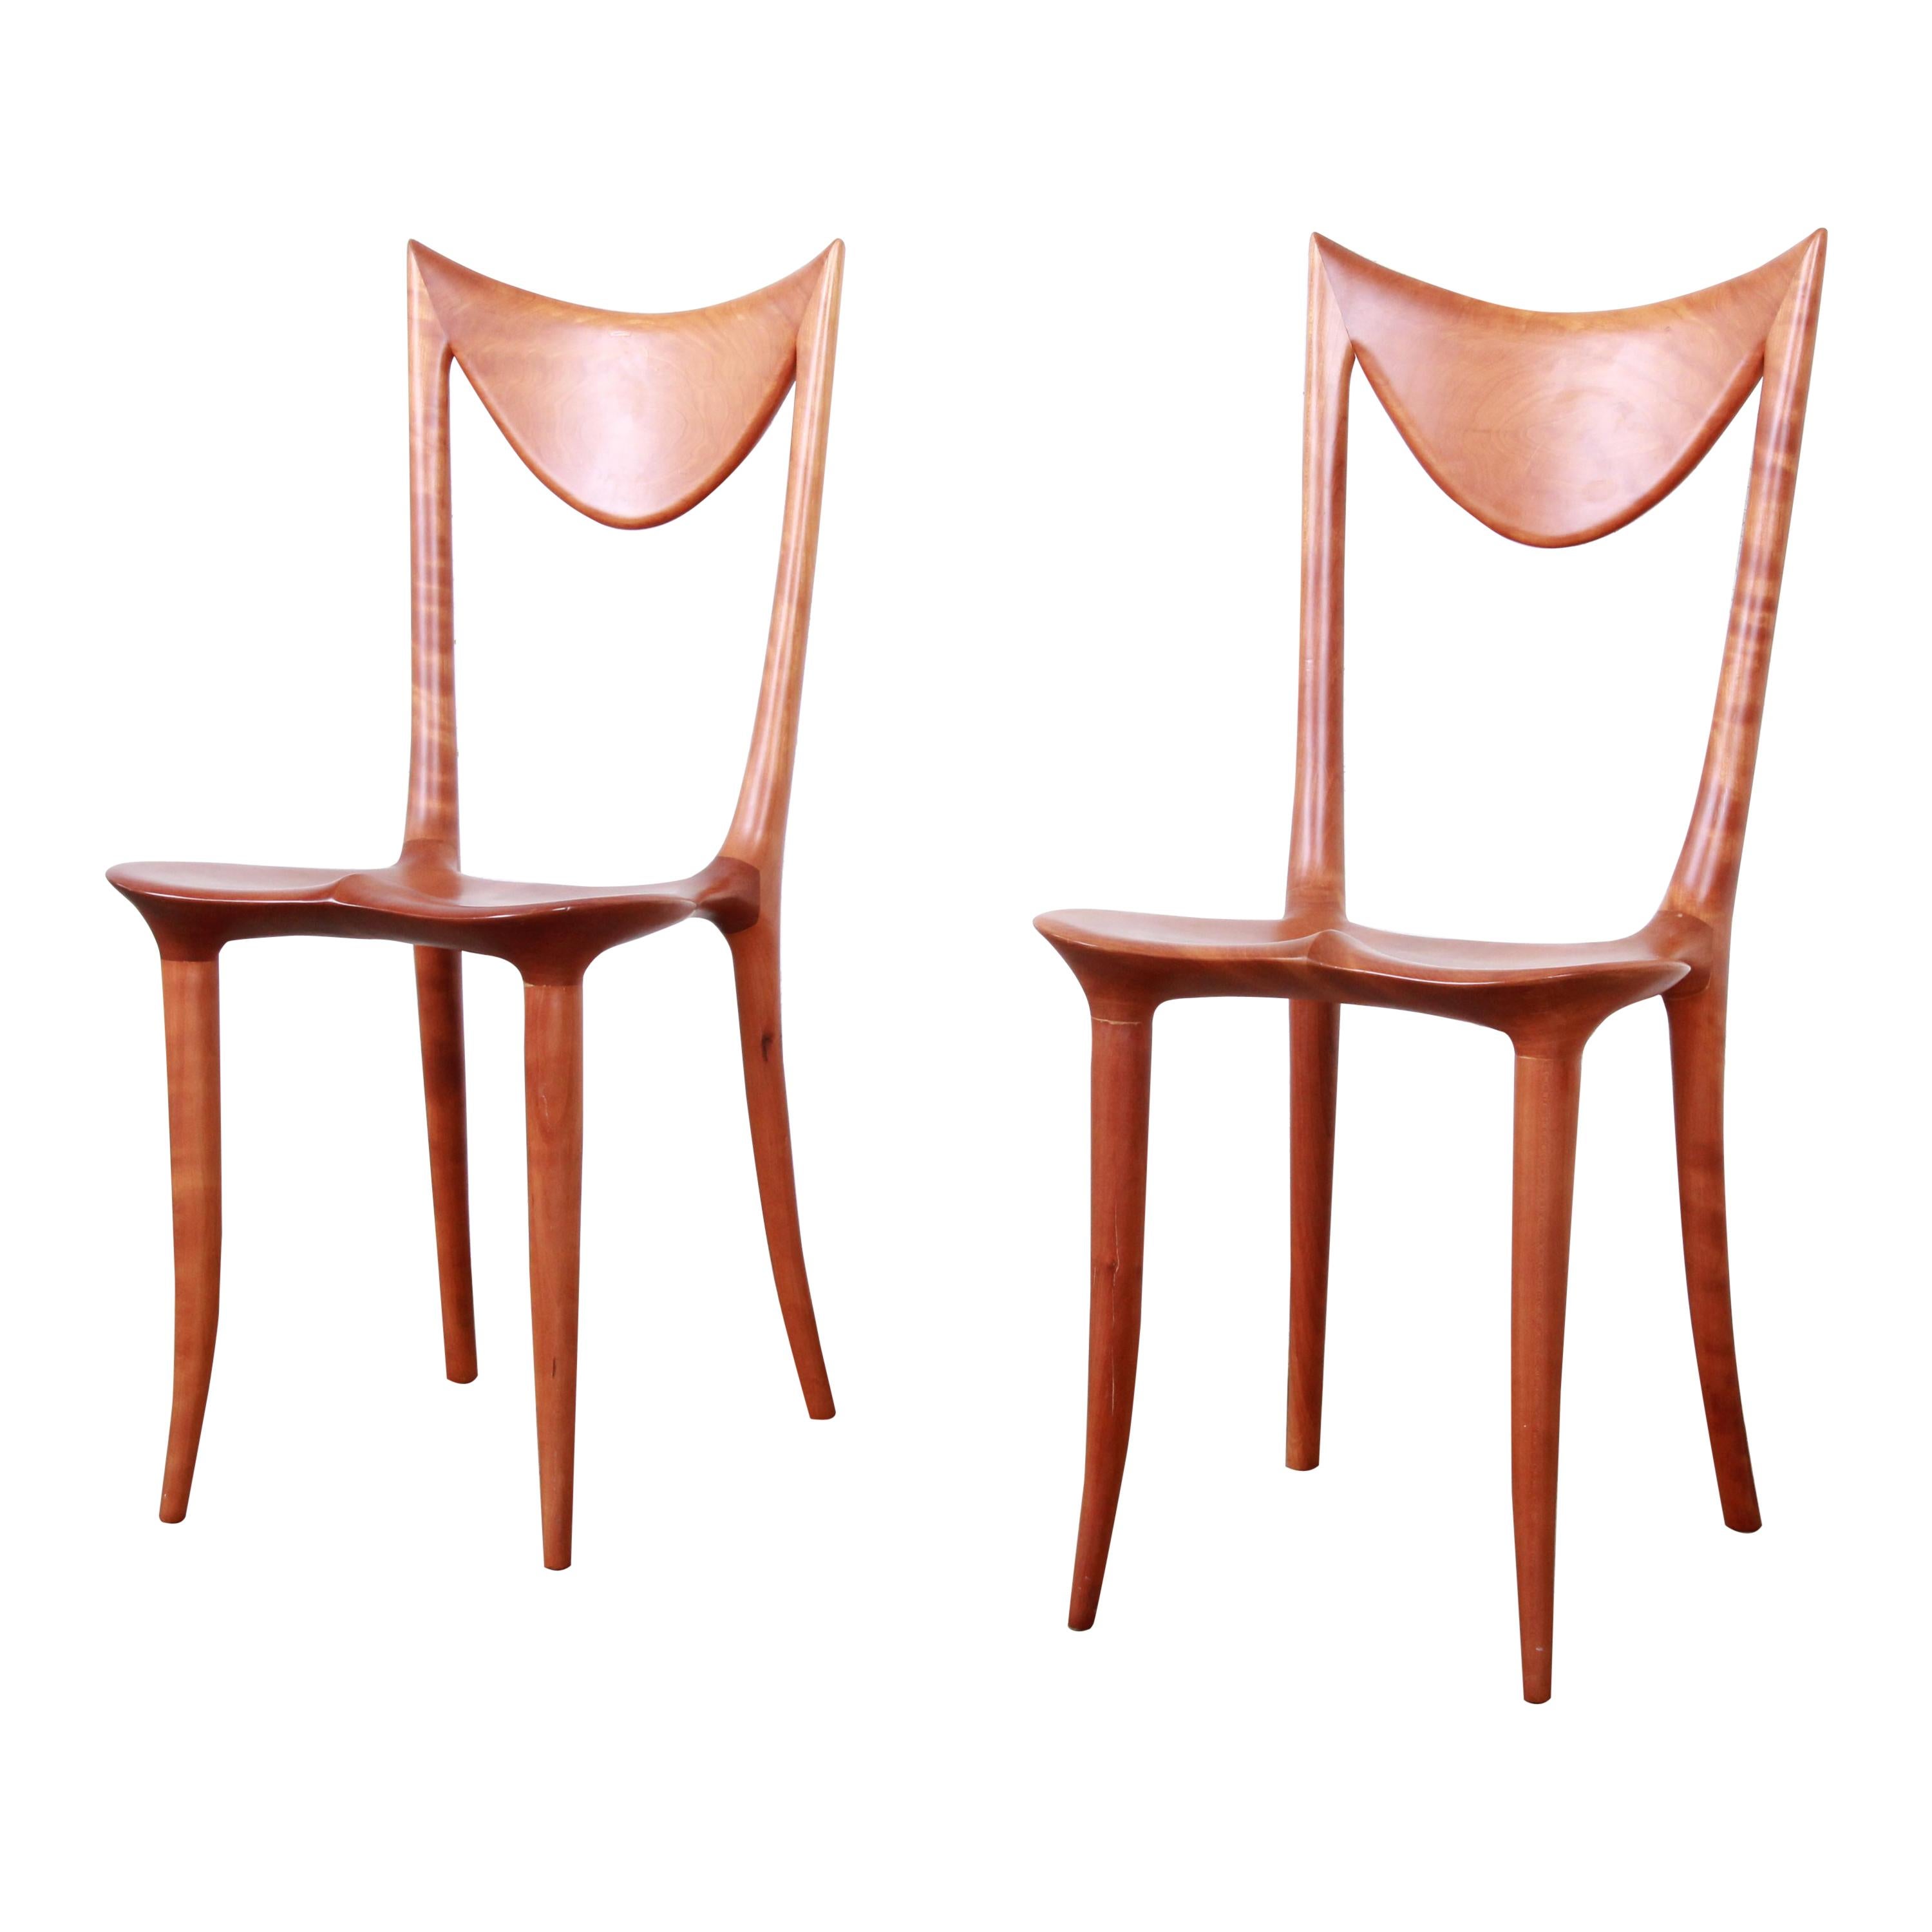 Oskar Kogoj Studio Craftsman Sculptural 'Venetia' Chairs, Pair